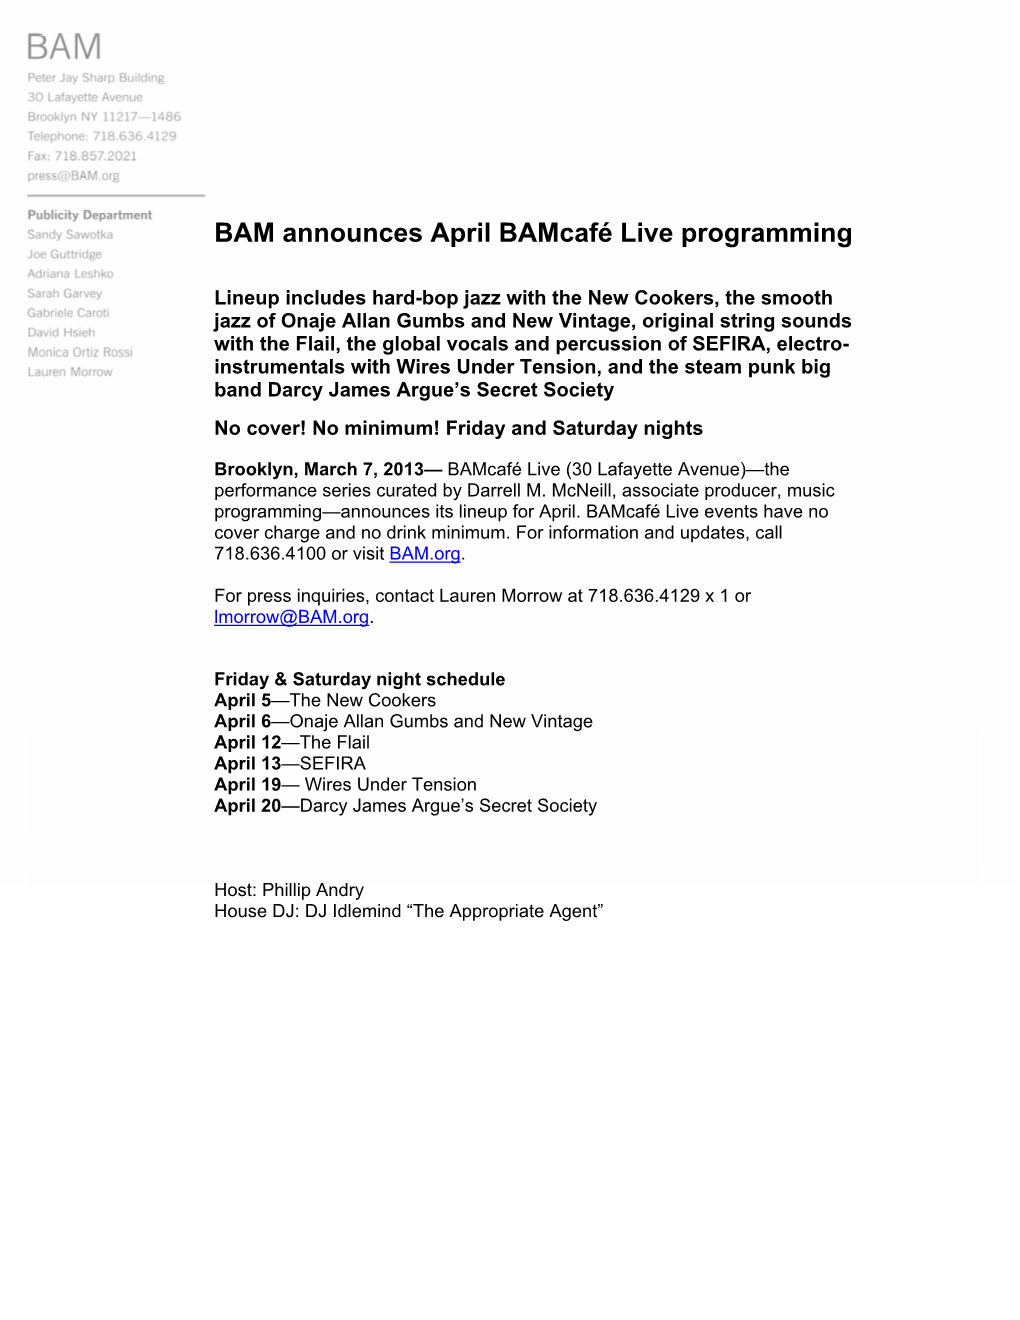 BAM Announces April Bamcafé Live Programming